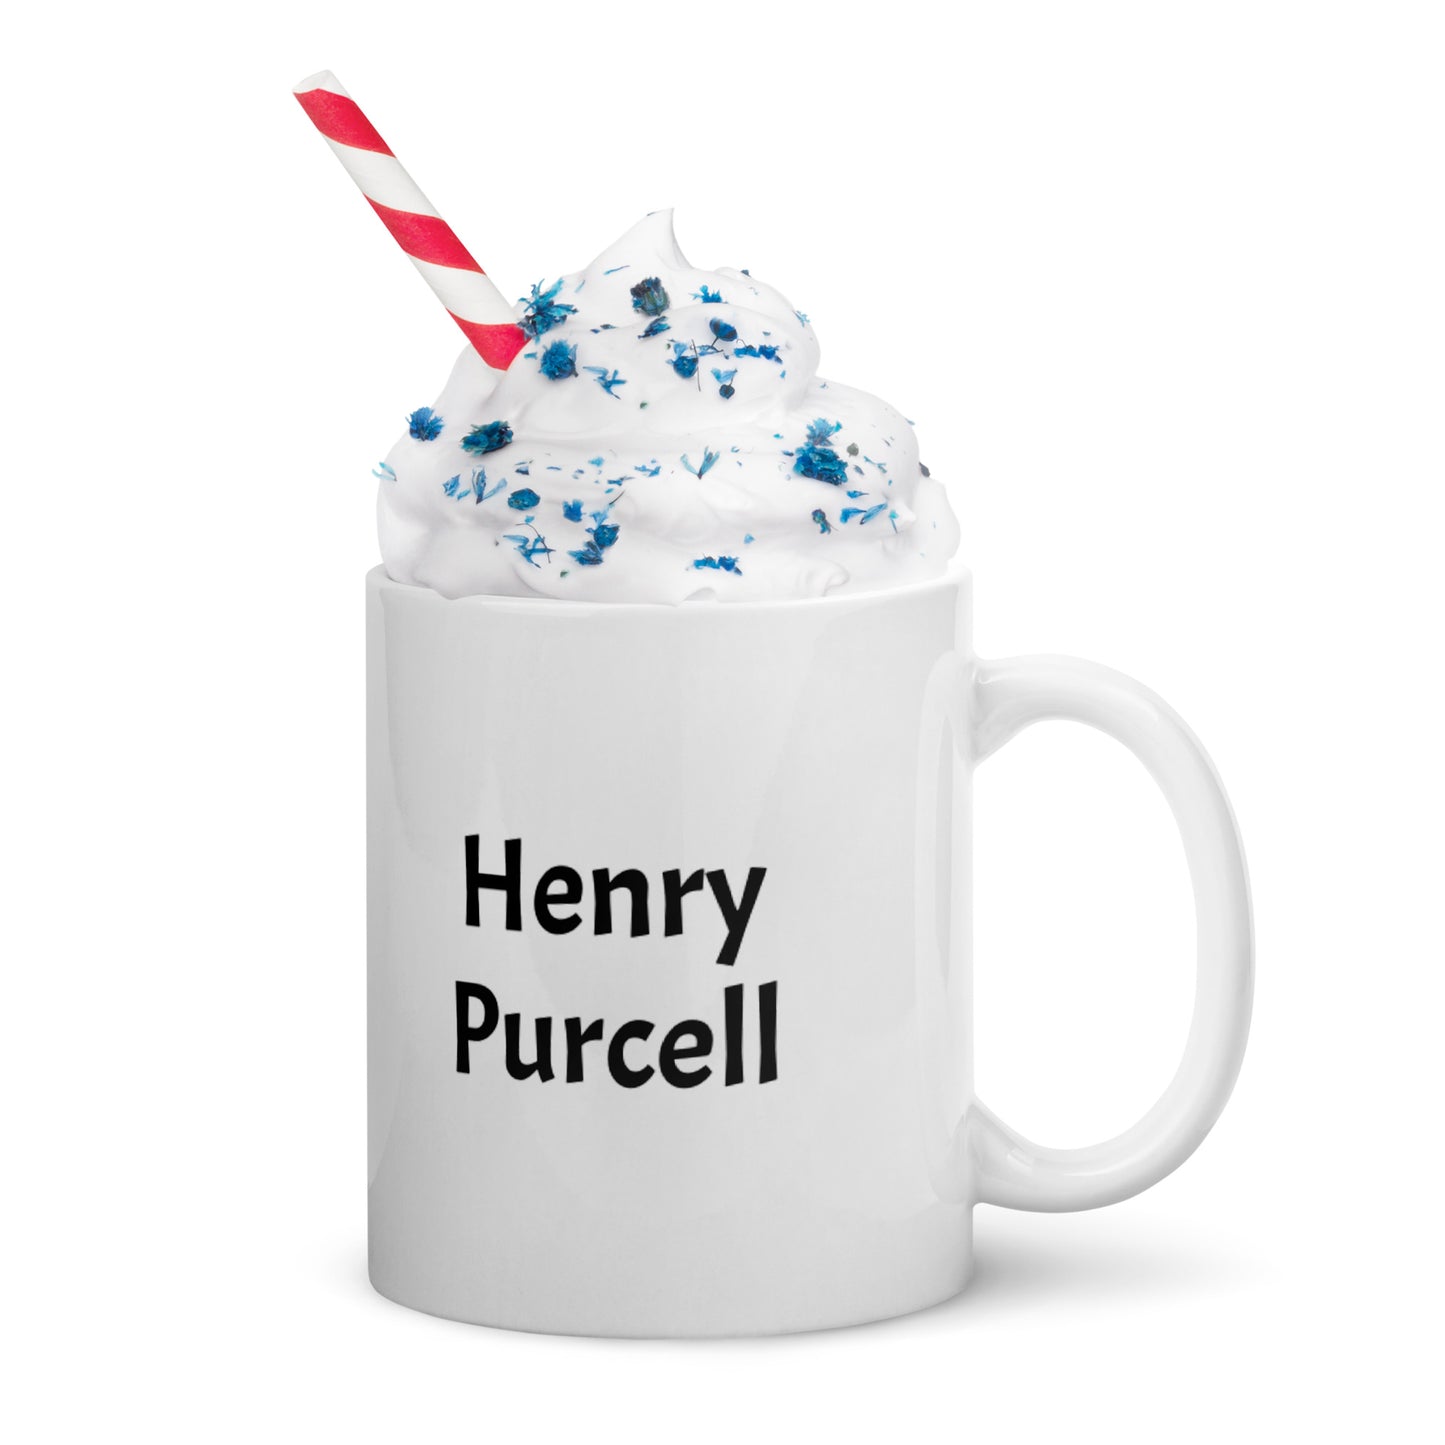 Henry Purcell white glossy mug